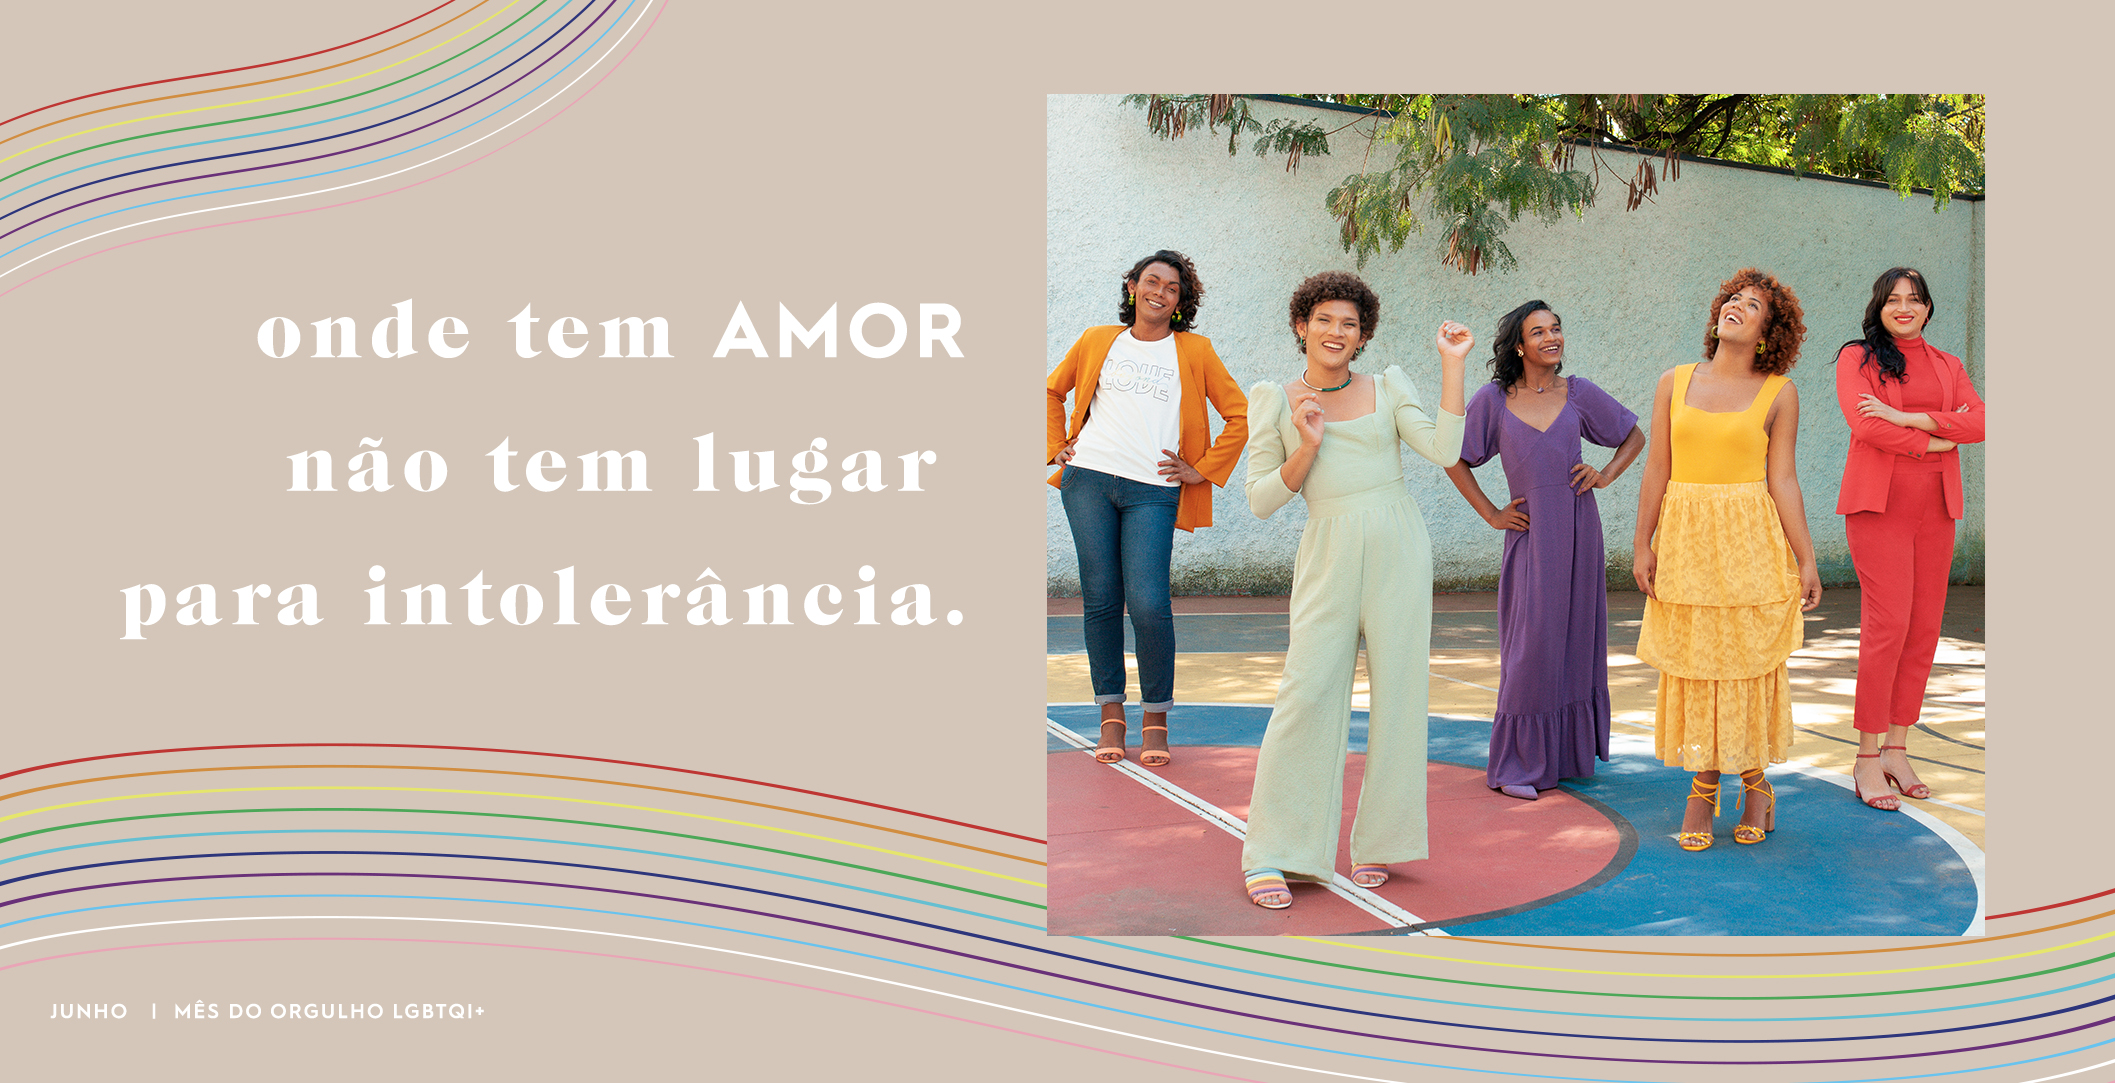 Amaro campanha LGBTQIA+